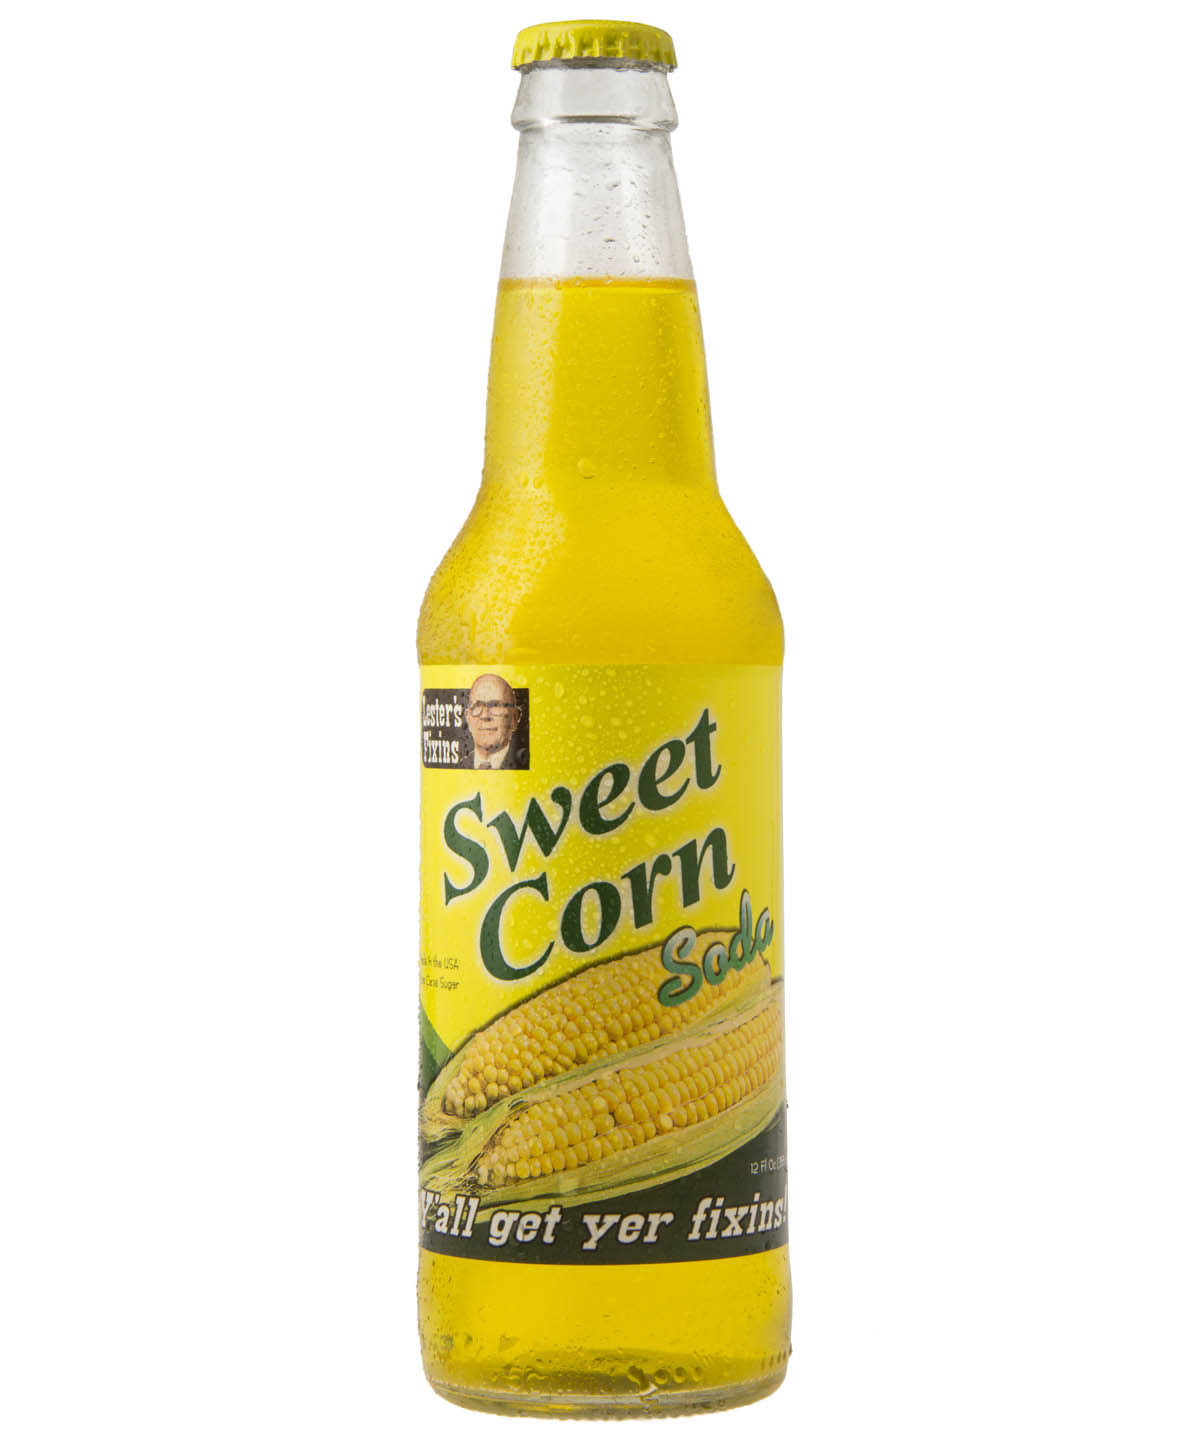 Lesters Fixins Sweet Corn Soda - 12 fl oz bottle